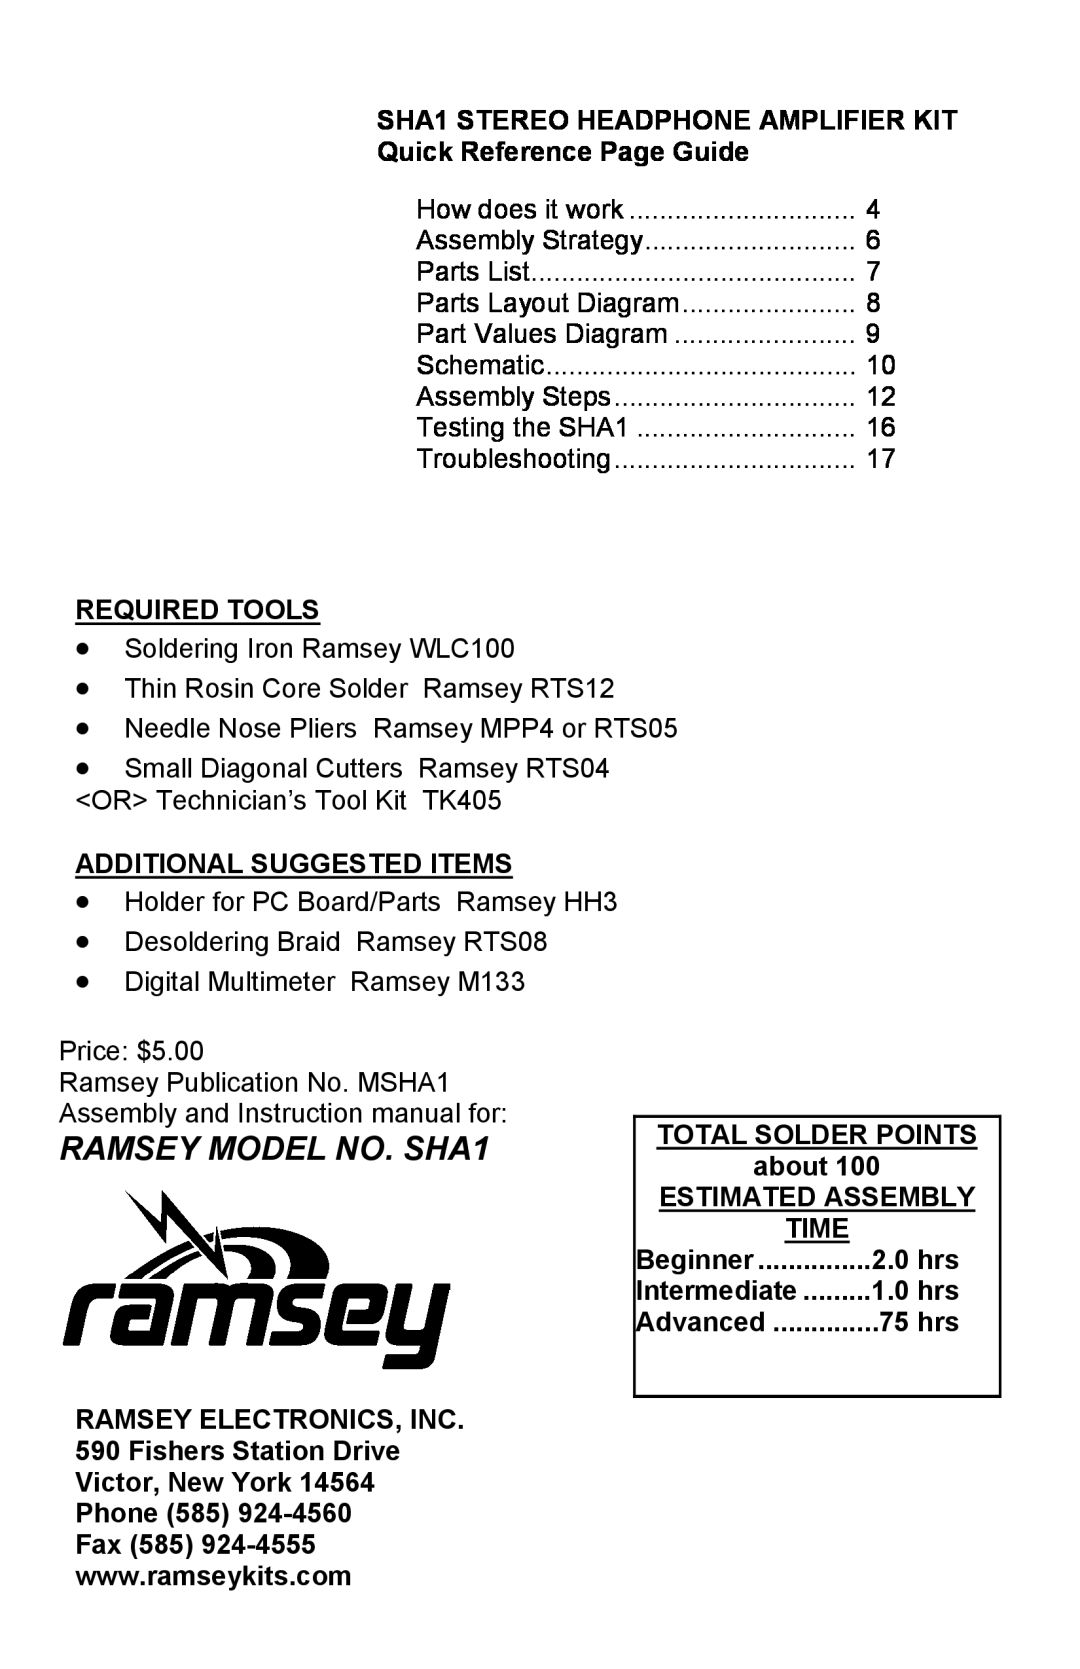 Ramsey Electronics manual RAMSEY MODEL NO. SHA1 